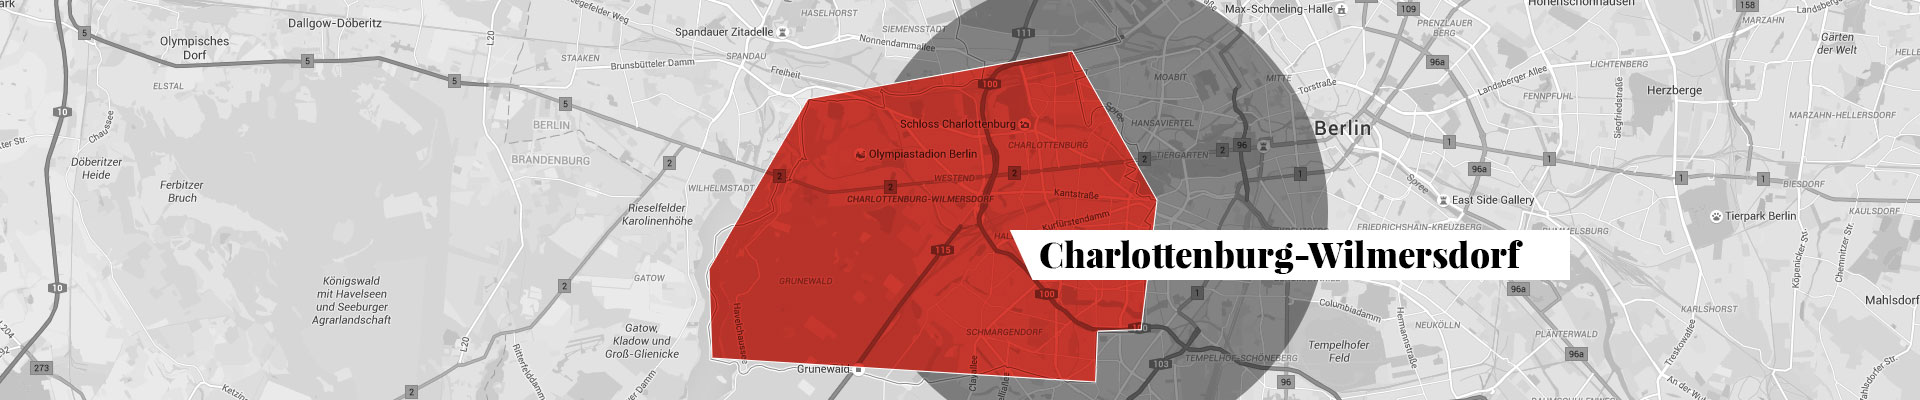 Charlottenburg-Wilmersdorf Stadtplan